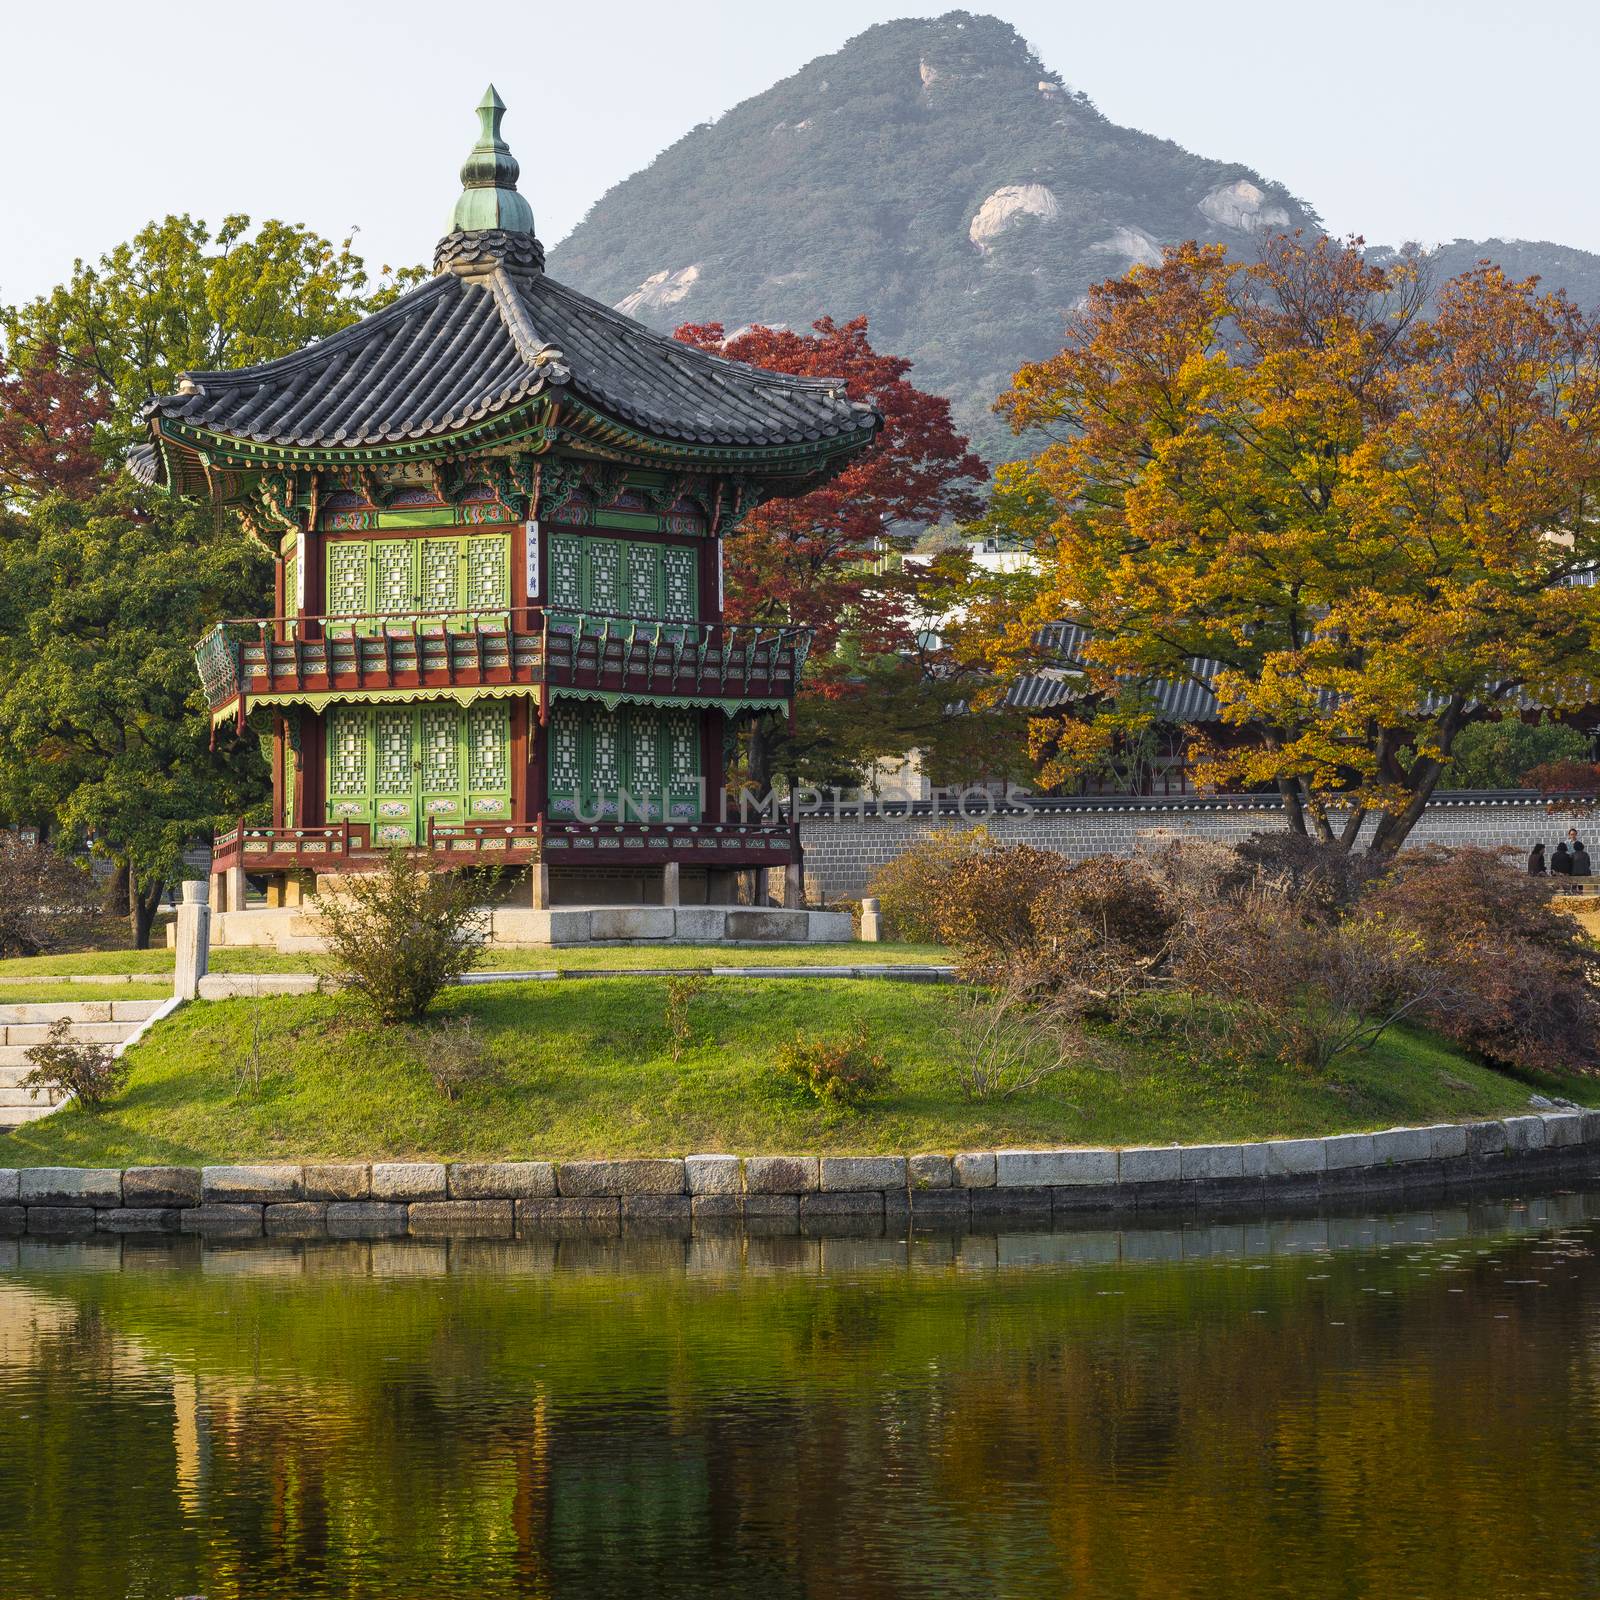 Emperor palace at Seoul. South Korea. Lake. Mountain. Reflections on lake. Autumn time.